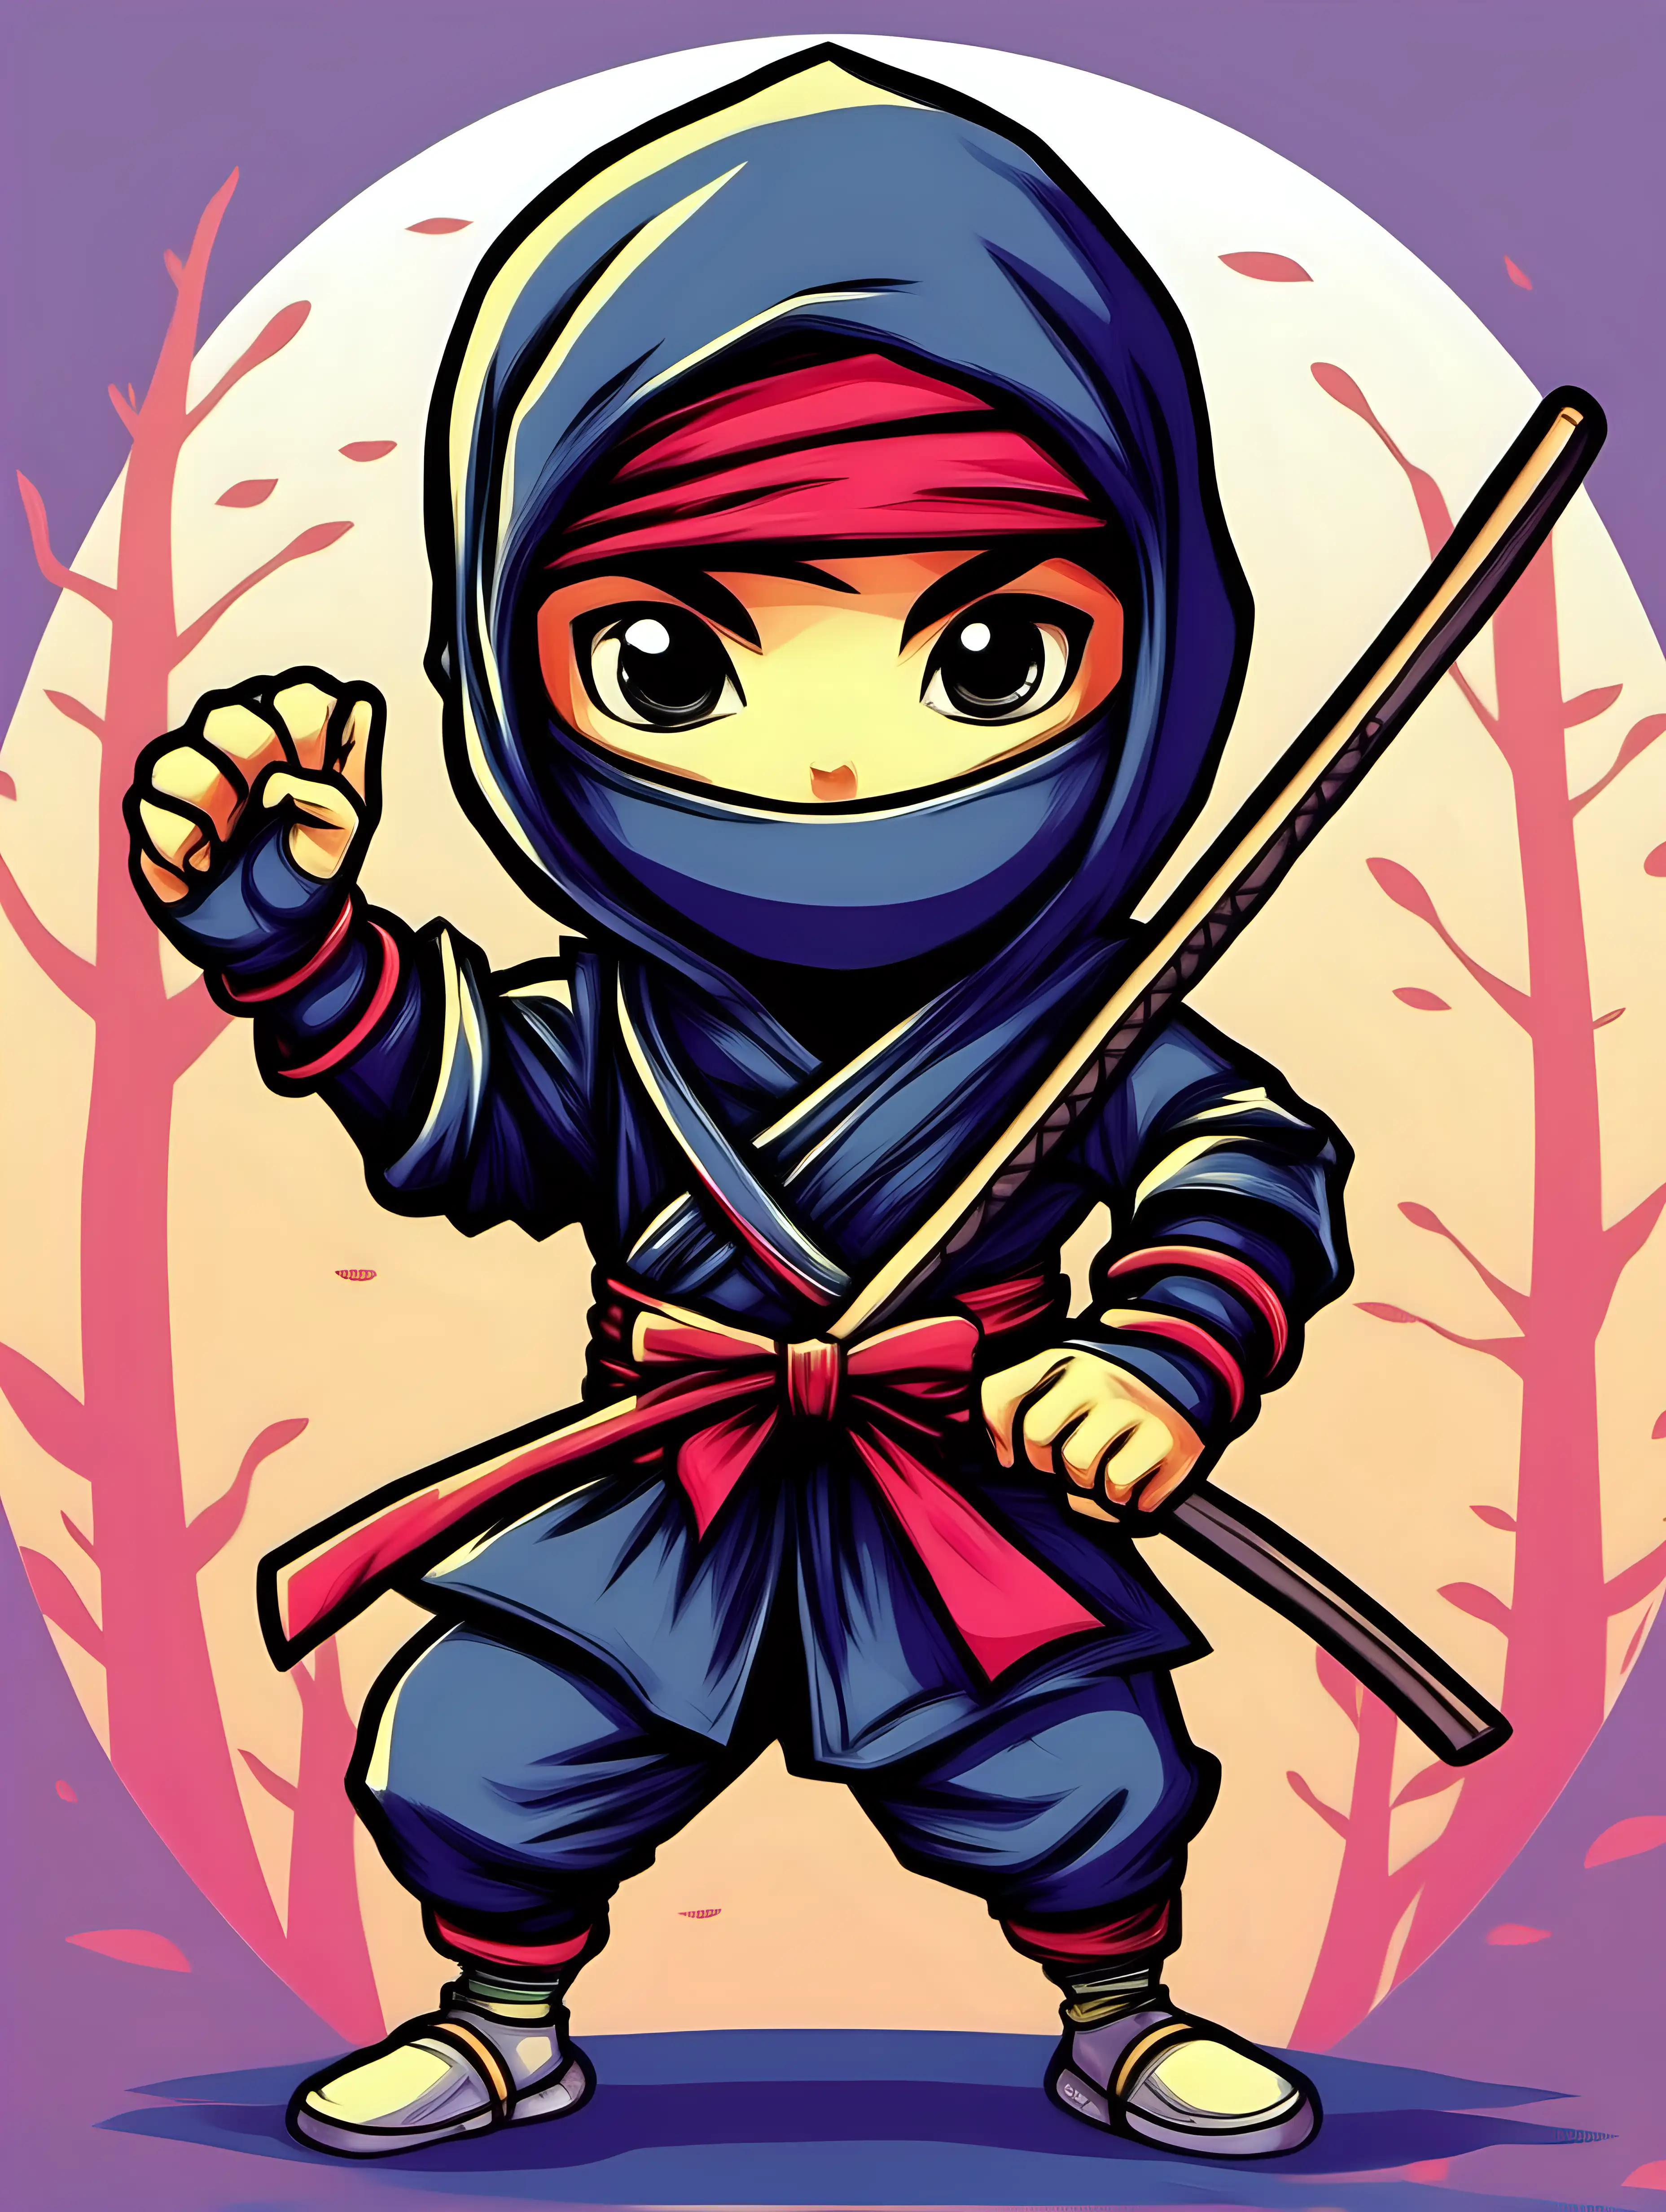 Cute ninja boy with bow staff, illustration, colorized, stylized